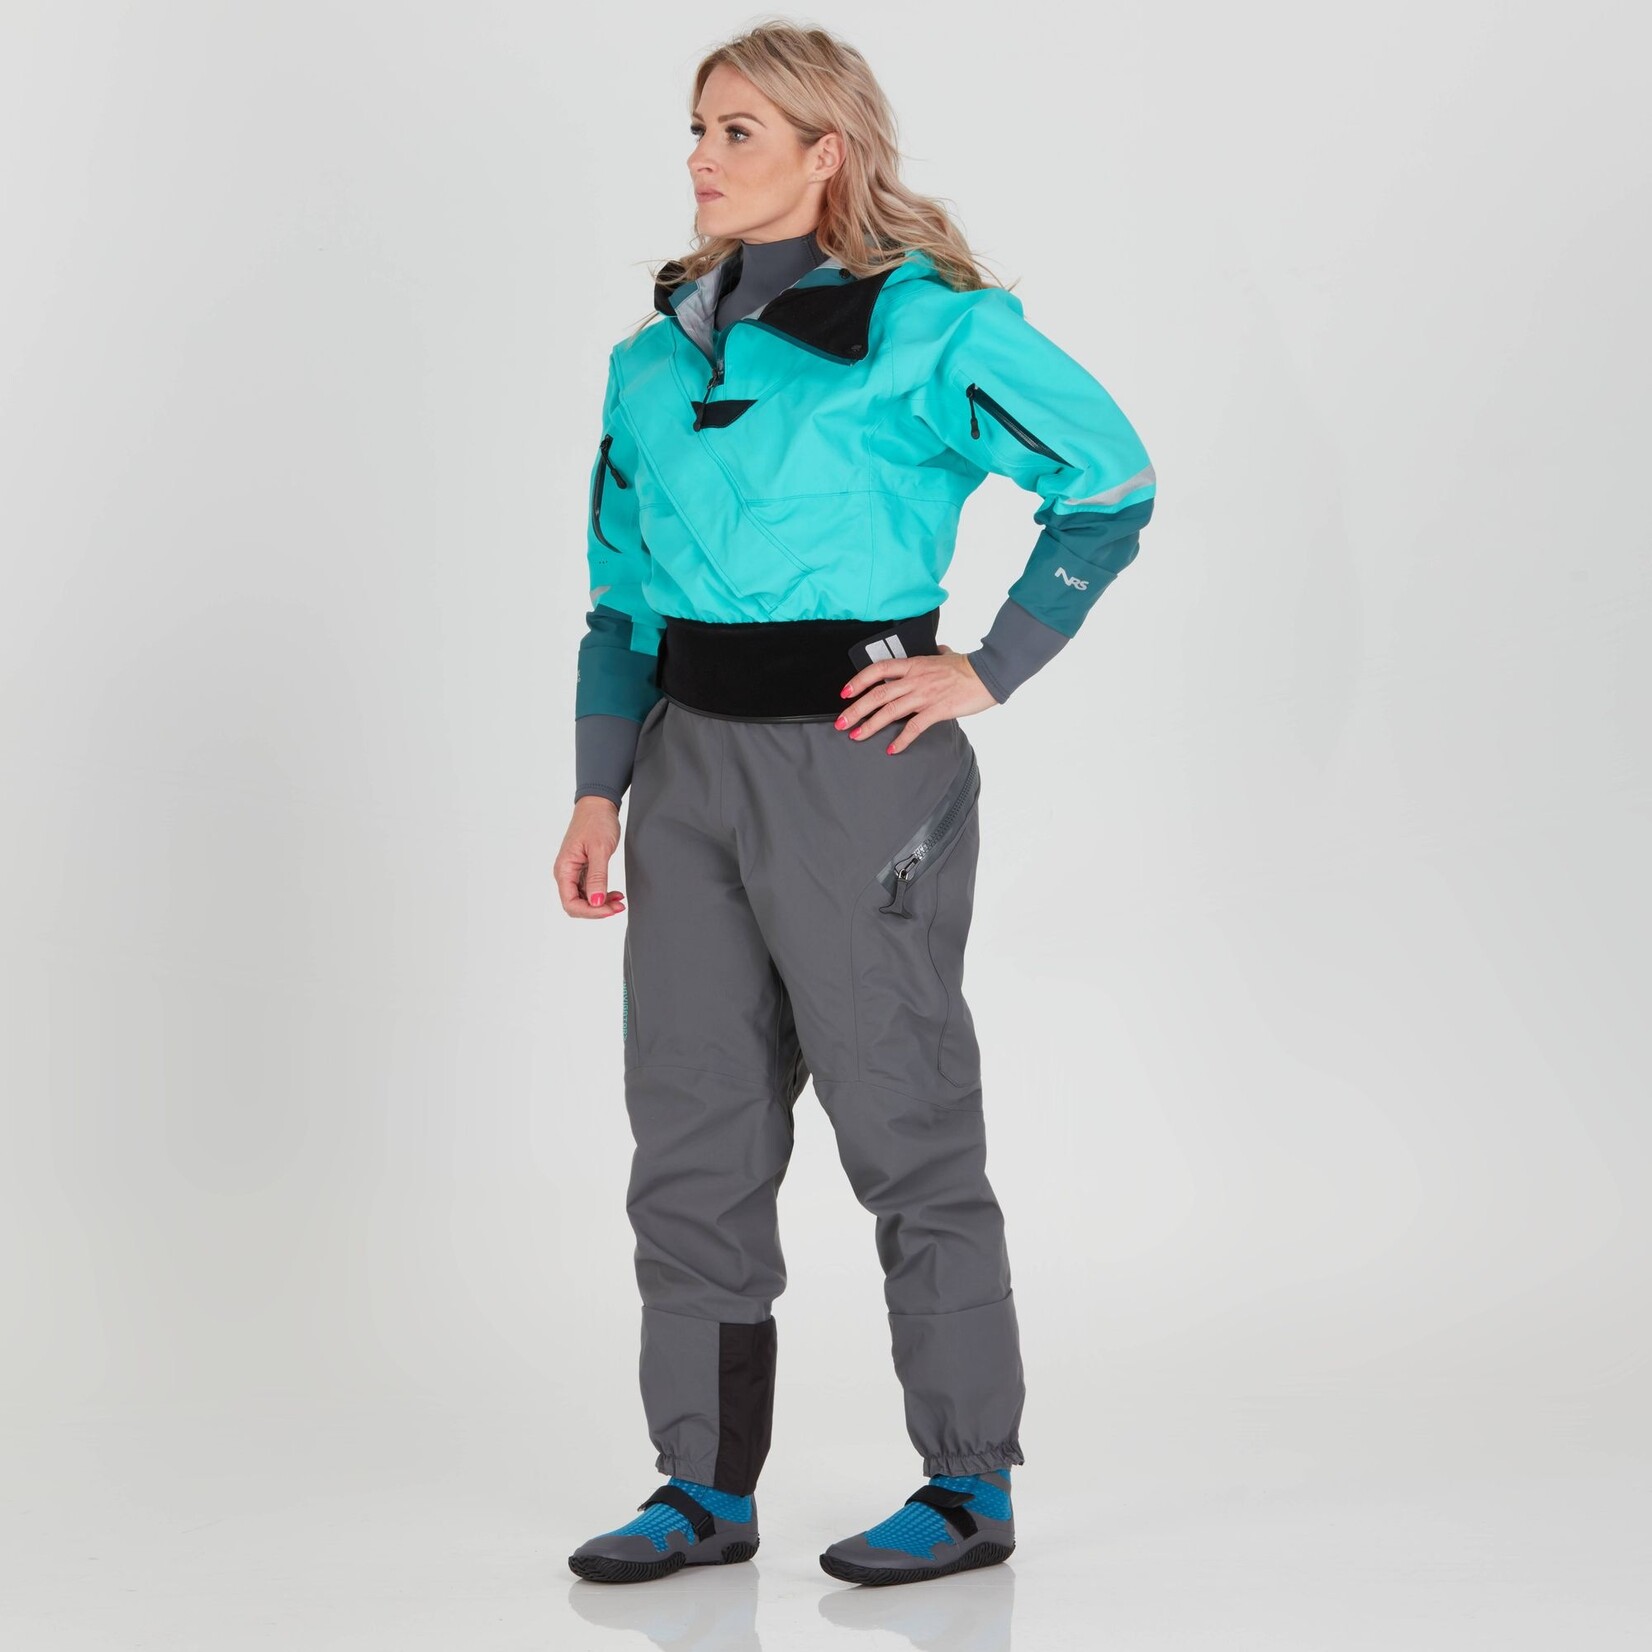 NRS - Women's Navigator GORE-TEX Pro Semi-Dry Suit